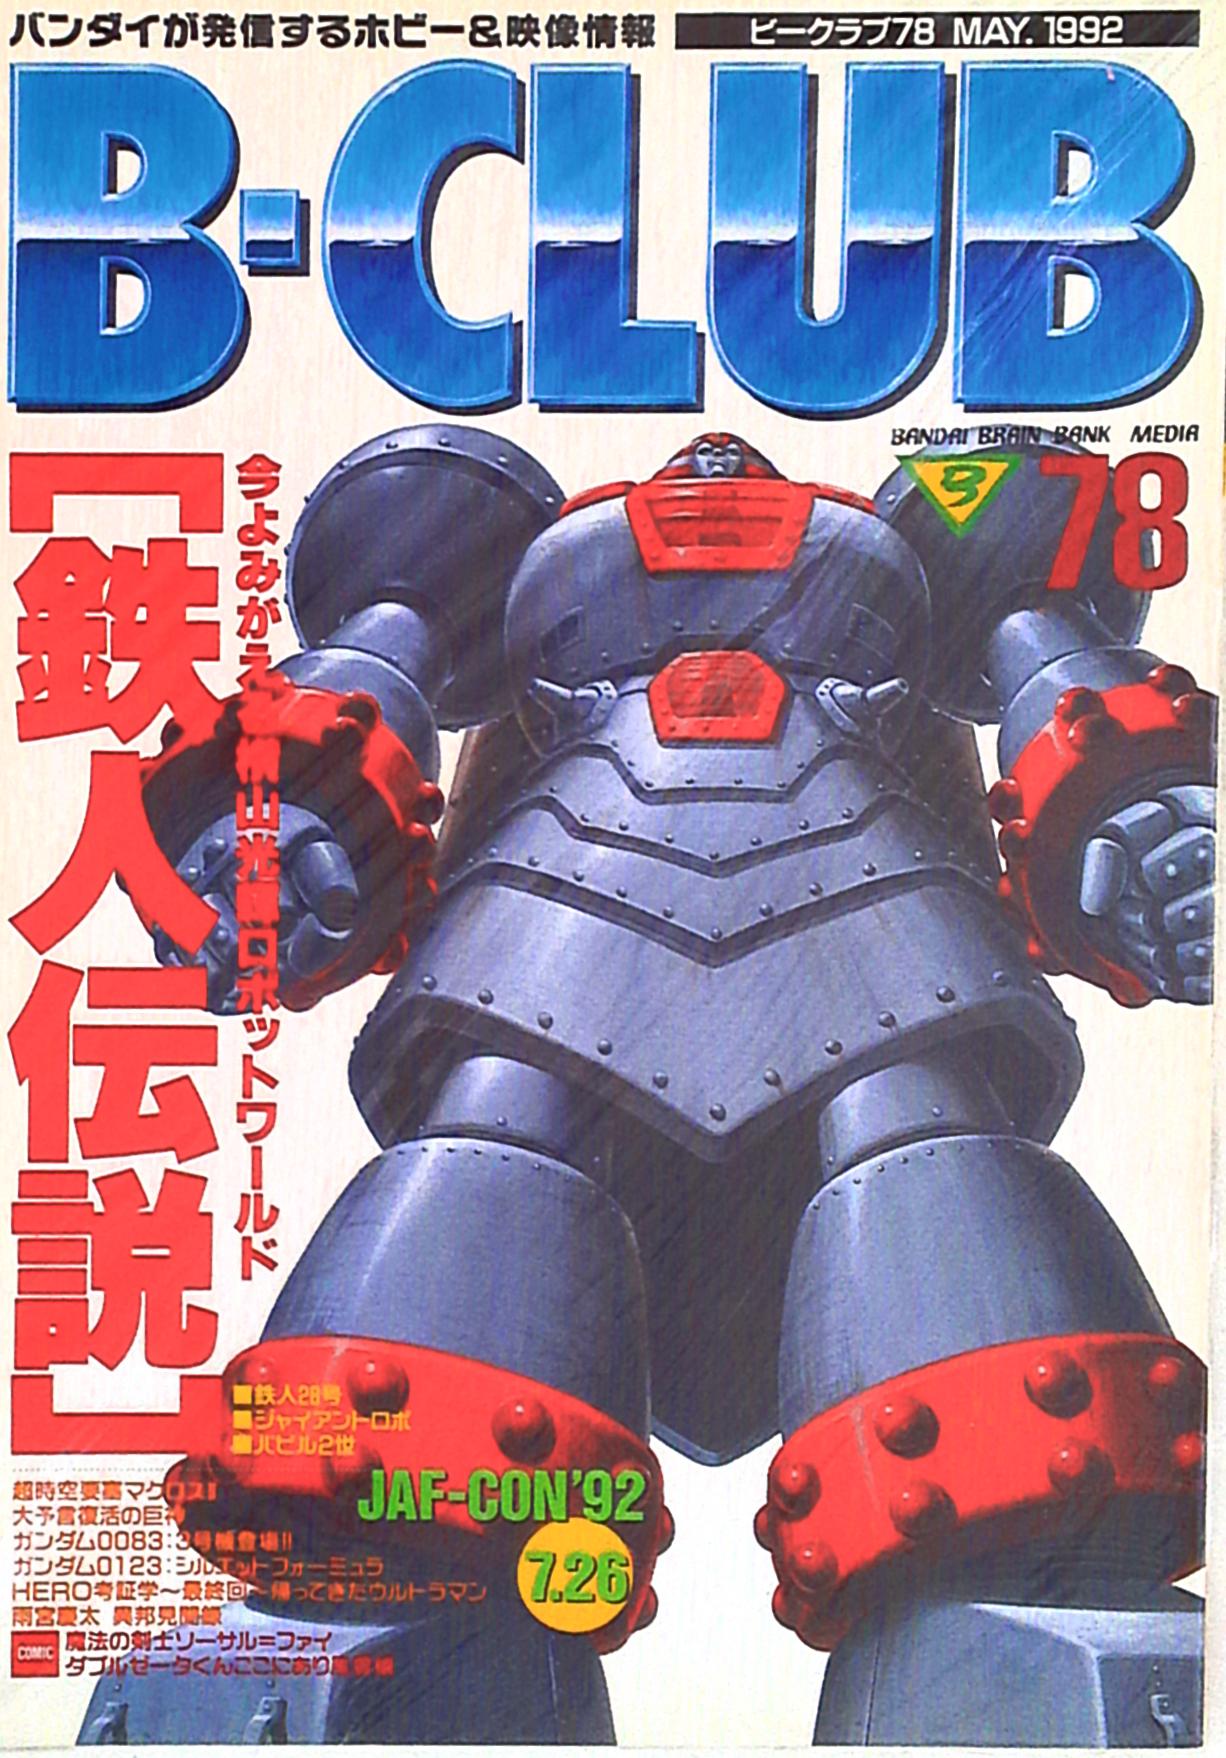 Bandai Bee Club No 78 78 Mandarake Online Shop